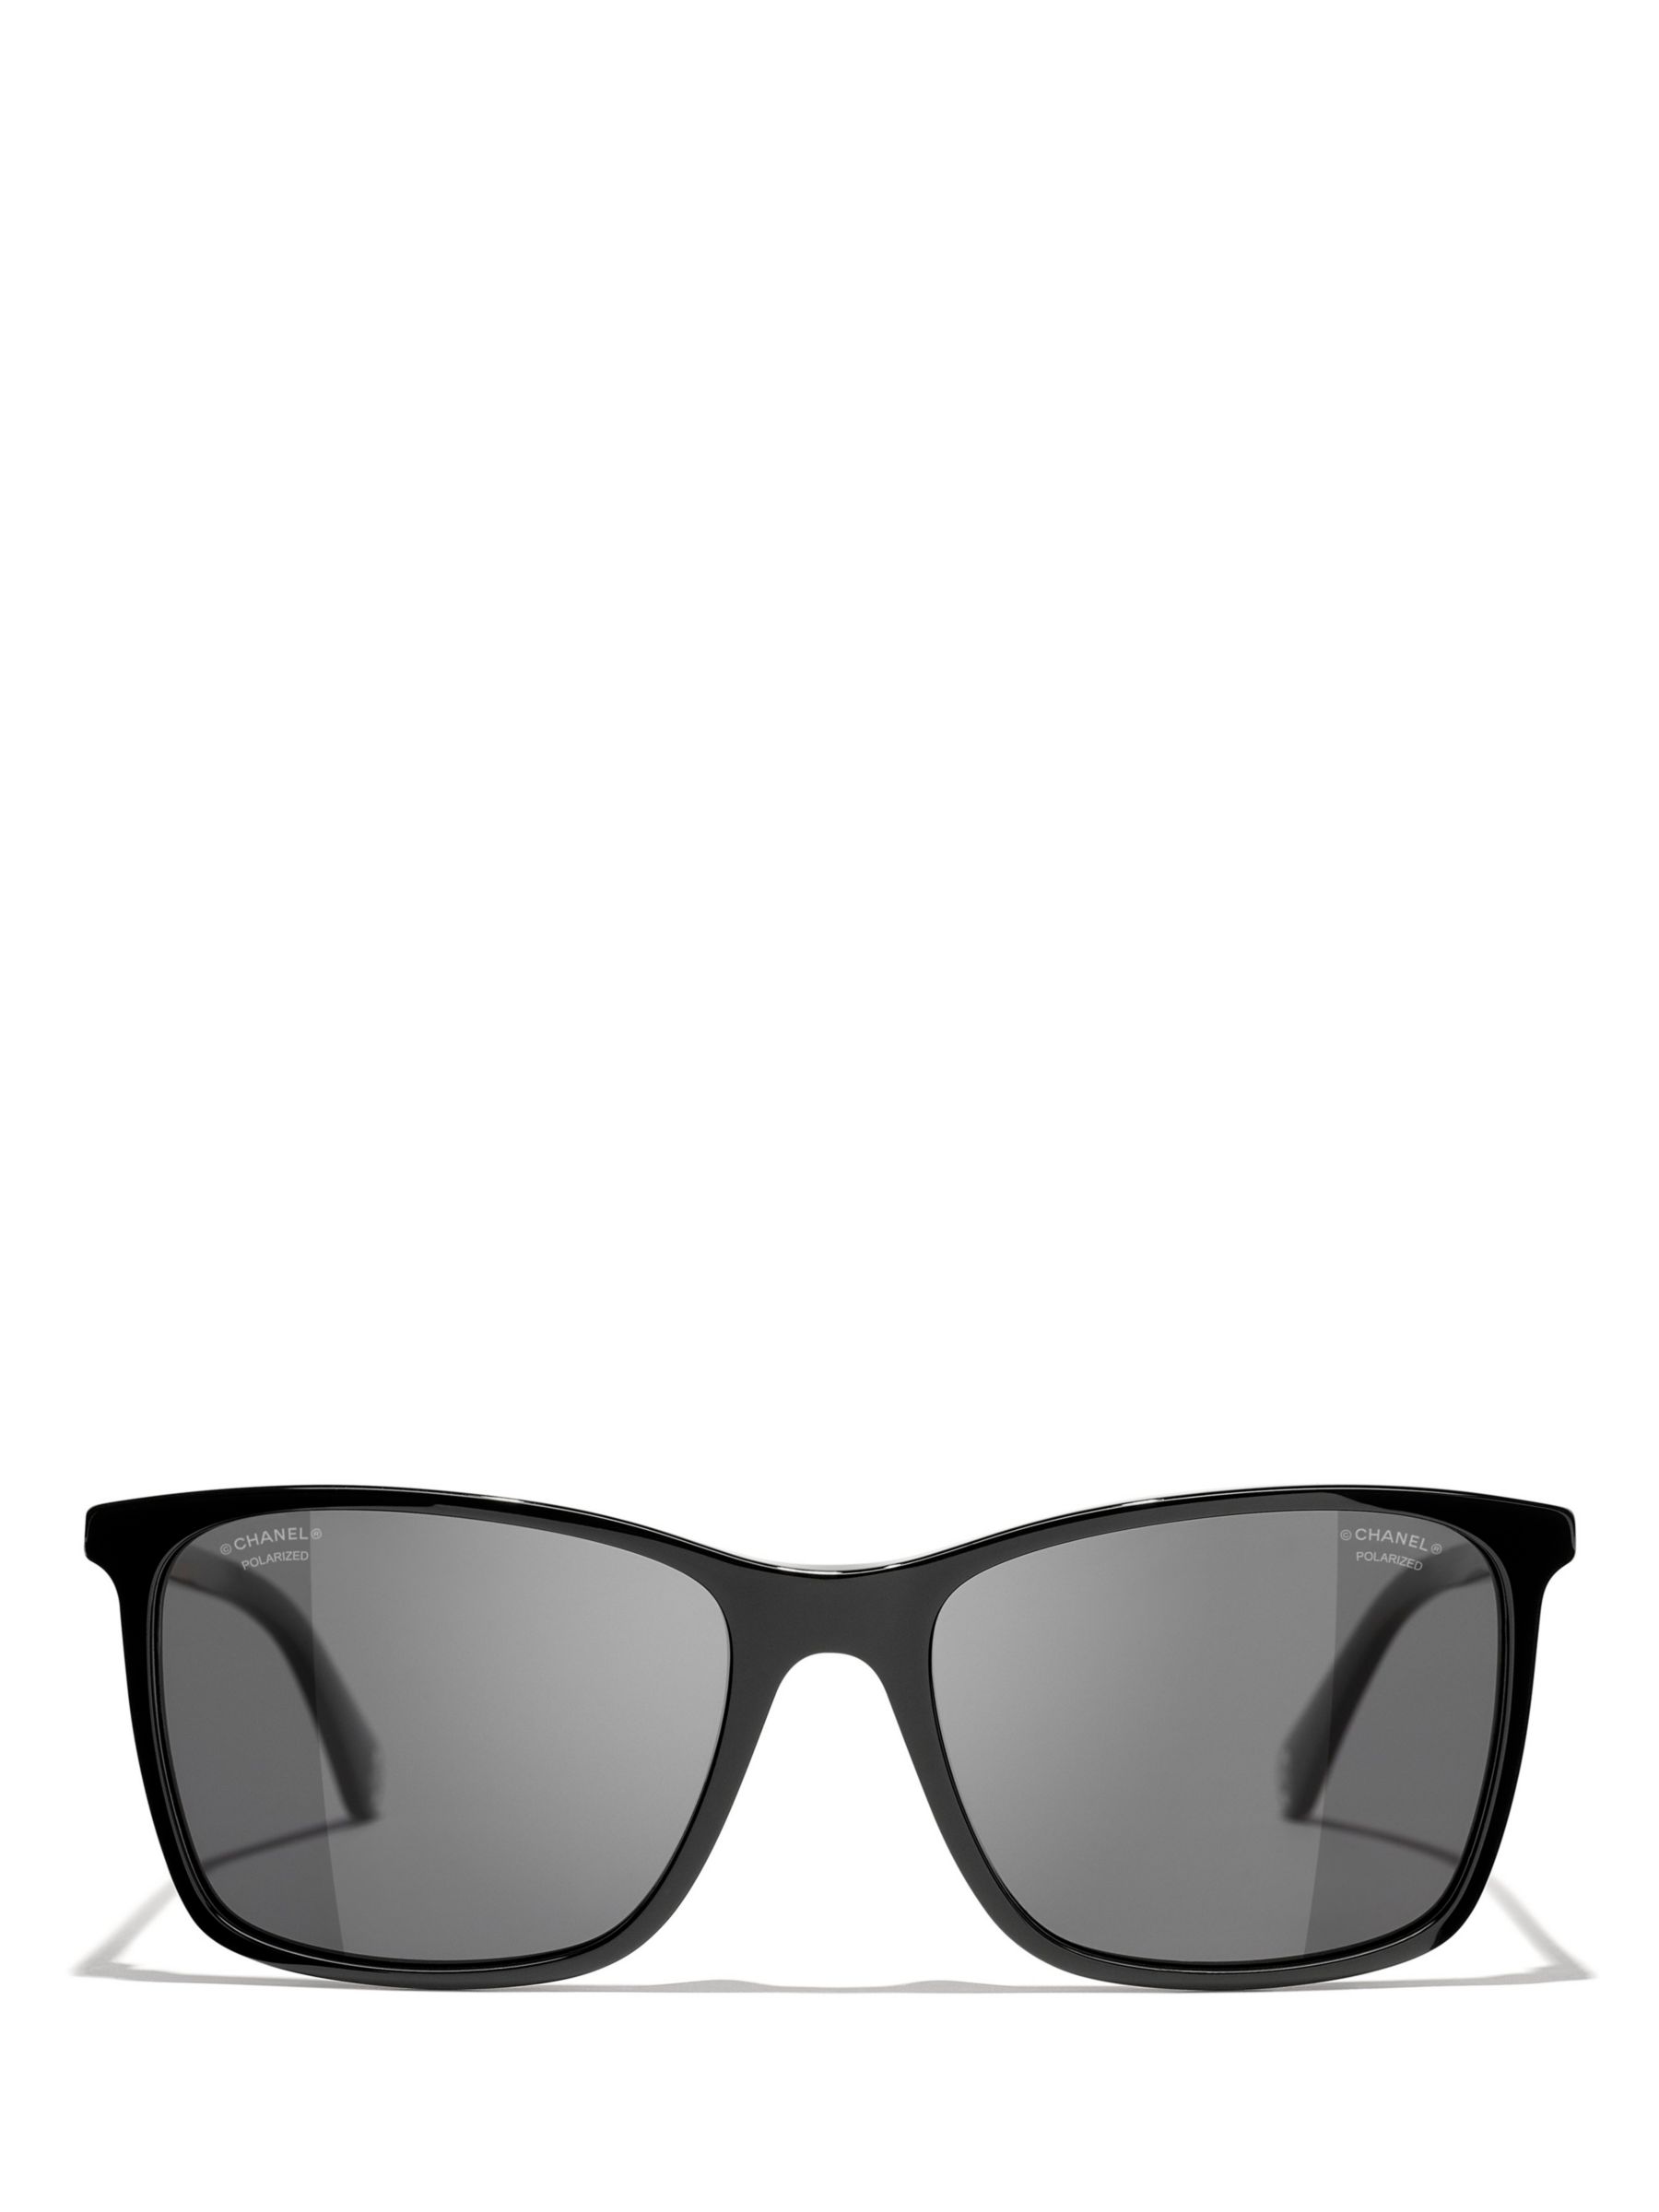 Chanel Rectangular Sunglasses CH5447 Black/Grey